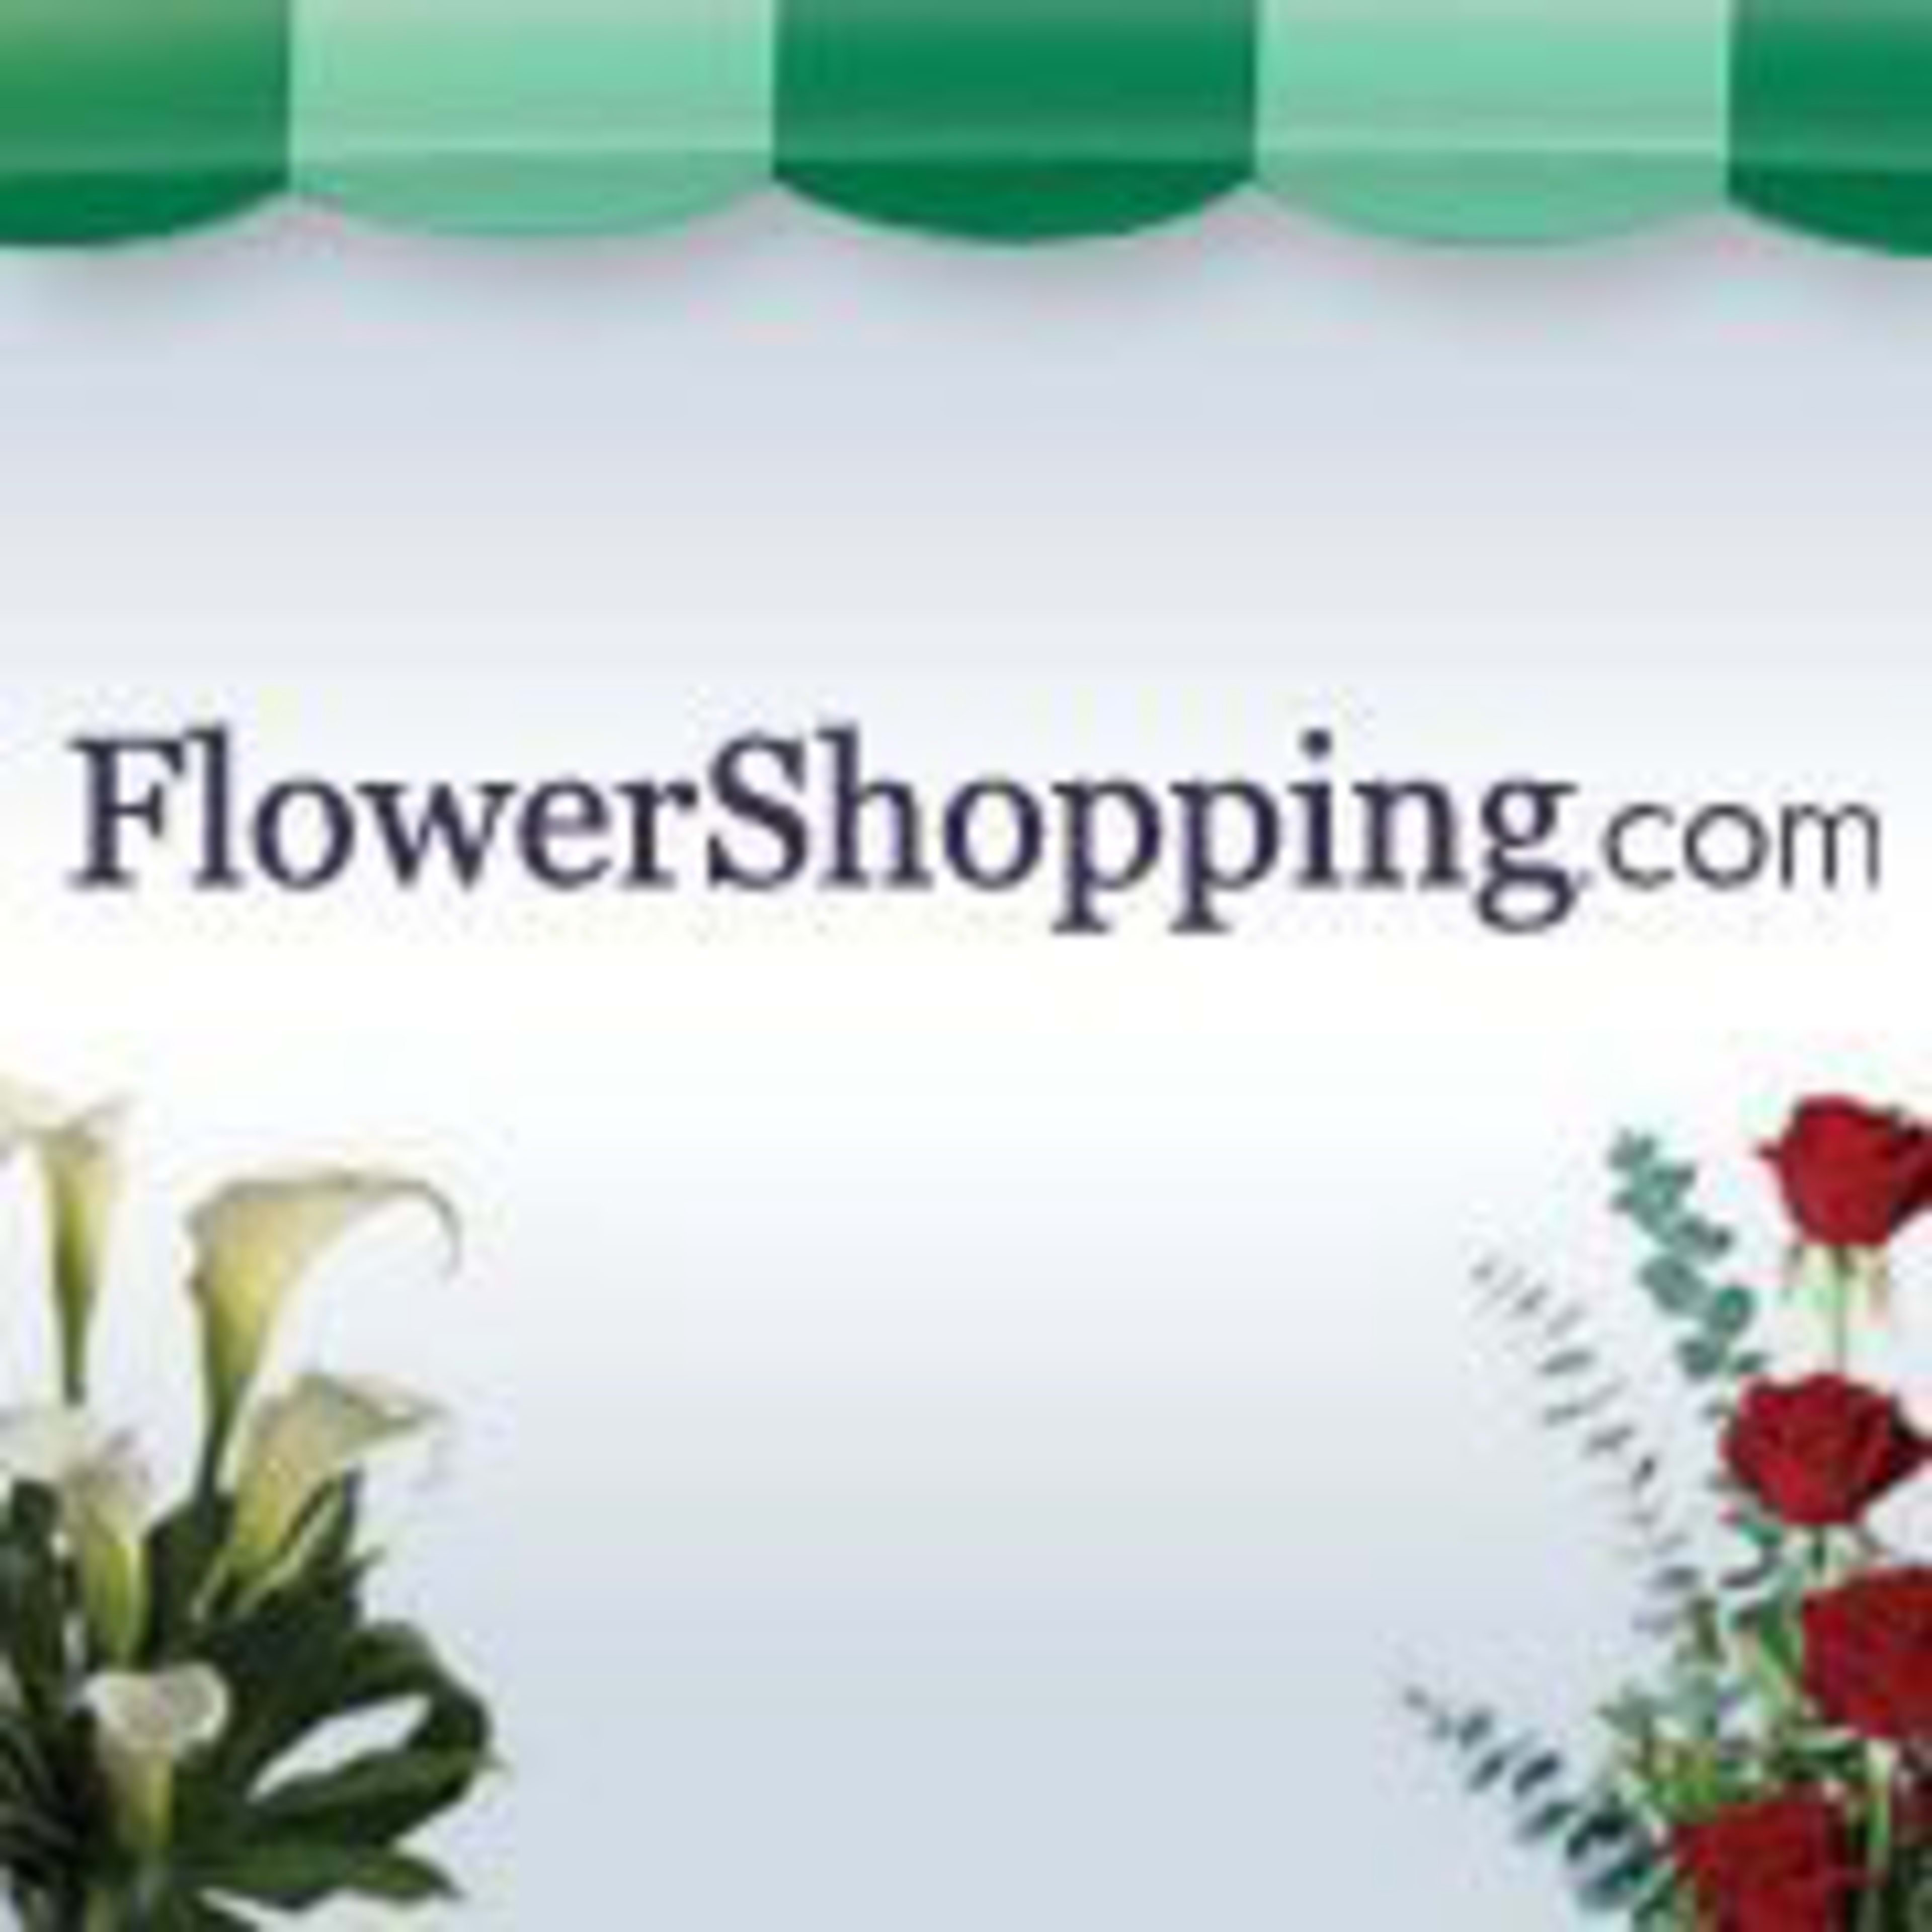 FlowerShopping.com Code